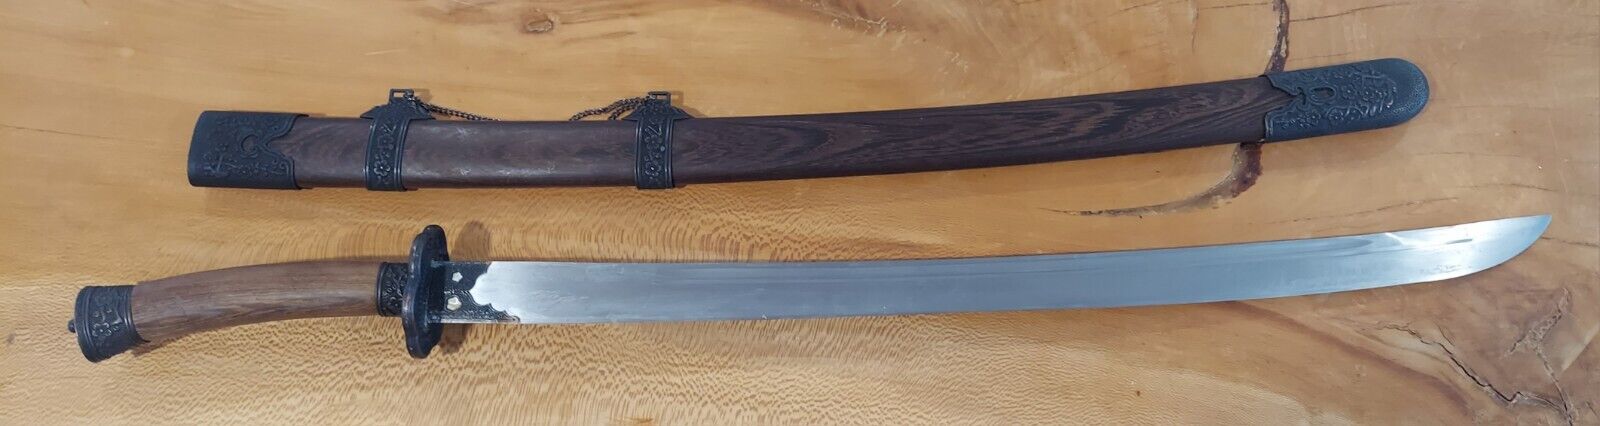 Chinese Martial Arts KUNG-FU Katana Broadsword Sword Knife High Carbon Steel